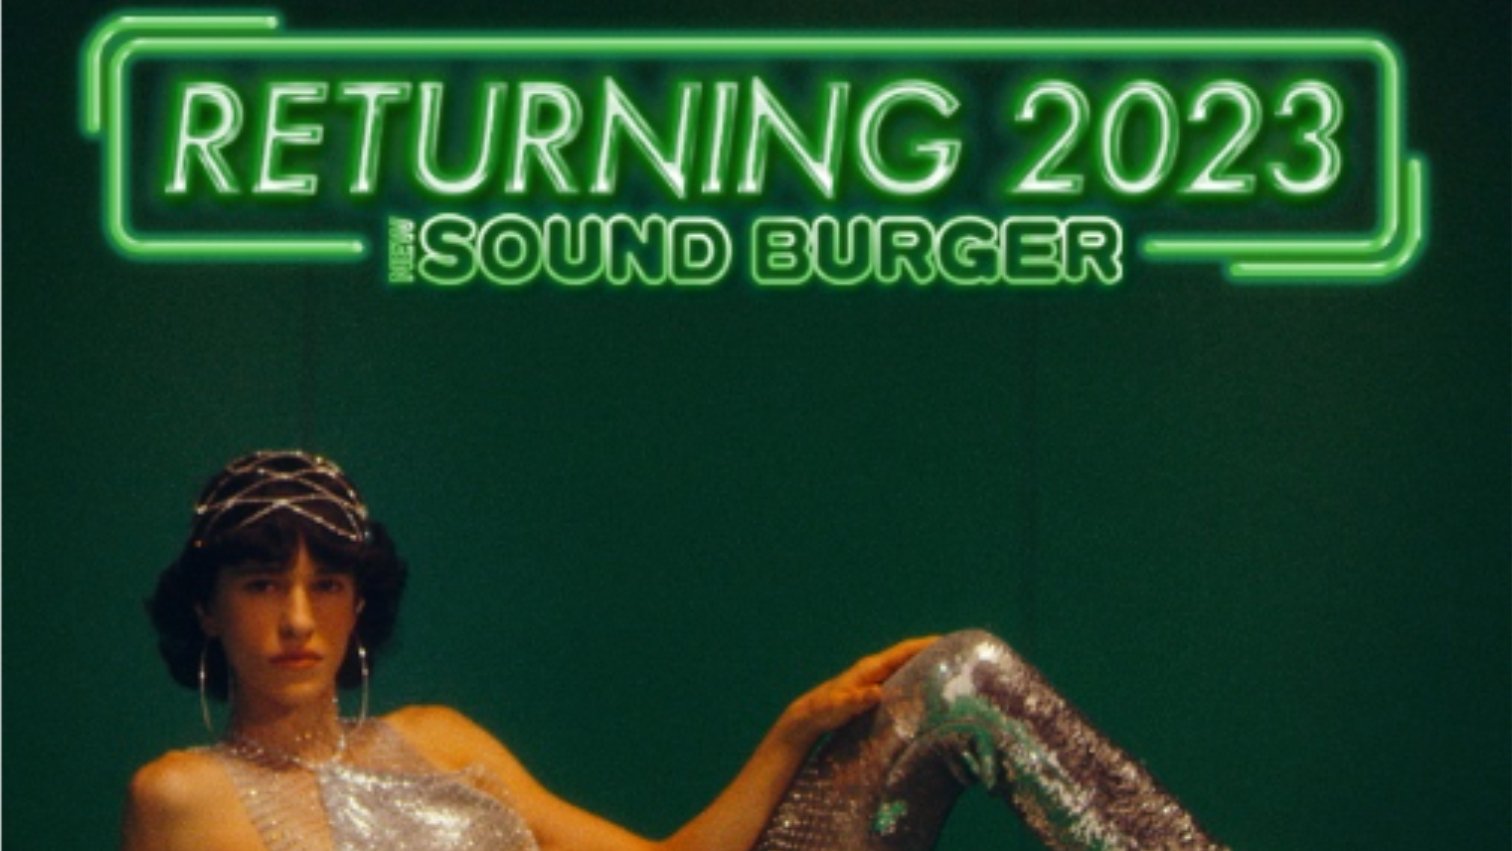 Audio-Technica Sound Burger written in neon green, with a model posing below